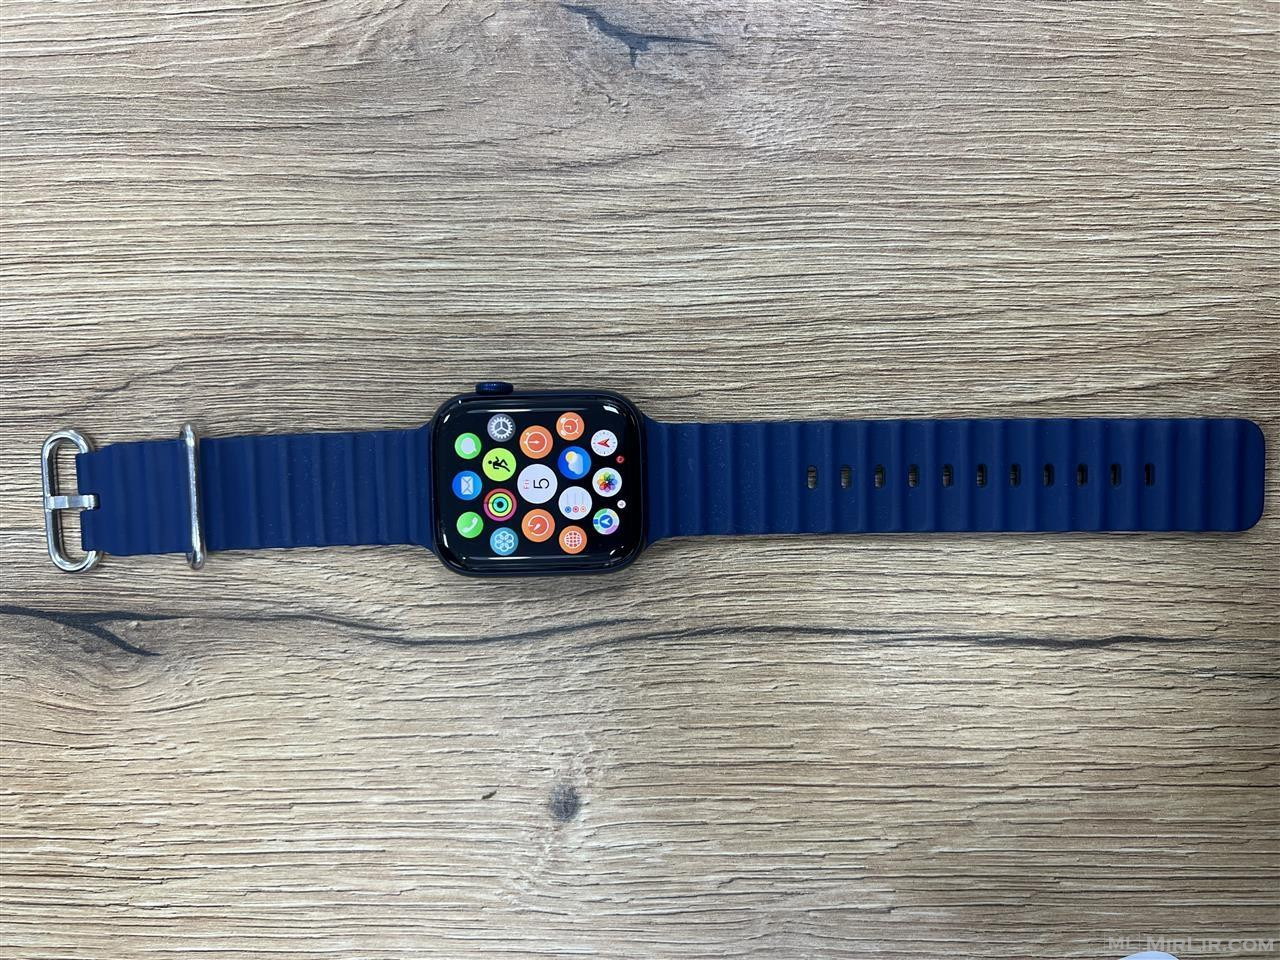 Apple watch series 6